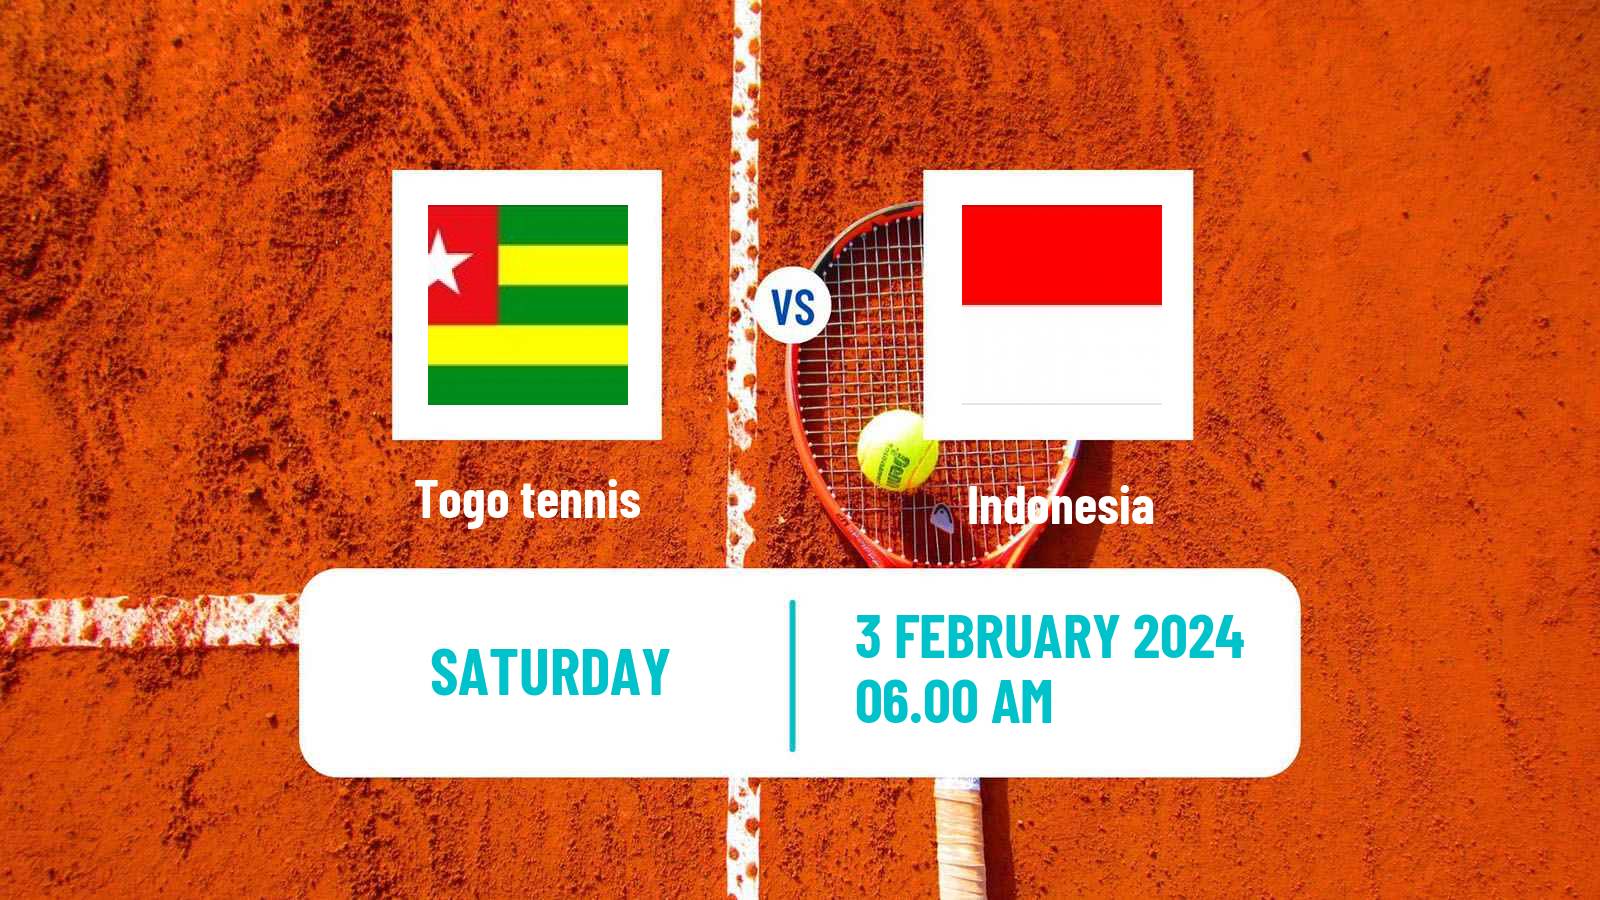 Tennis Davis Cup World Group II Teams Togo - Indonesia